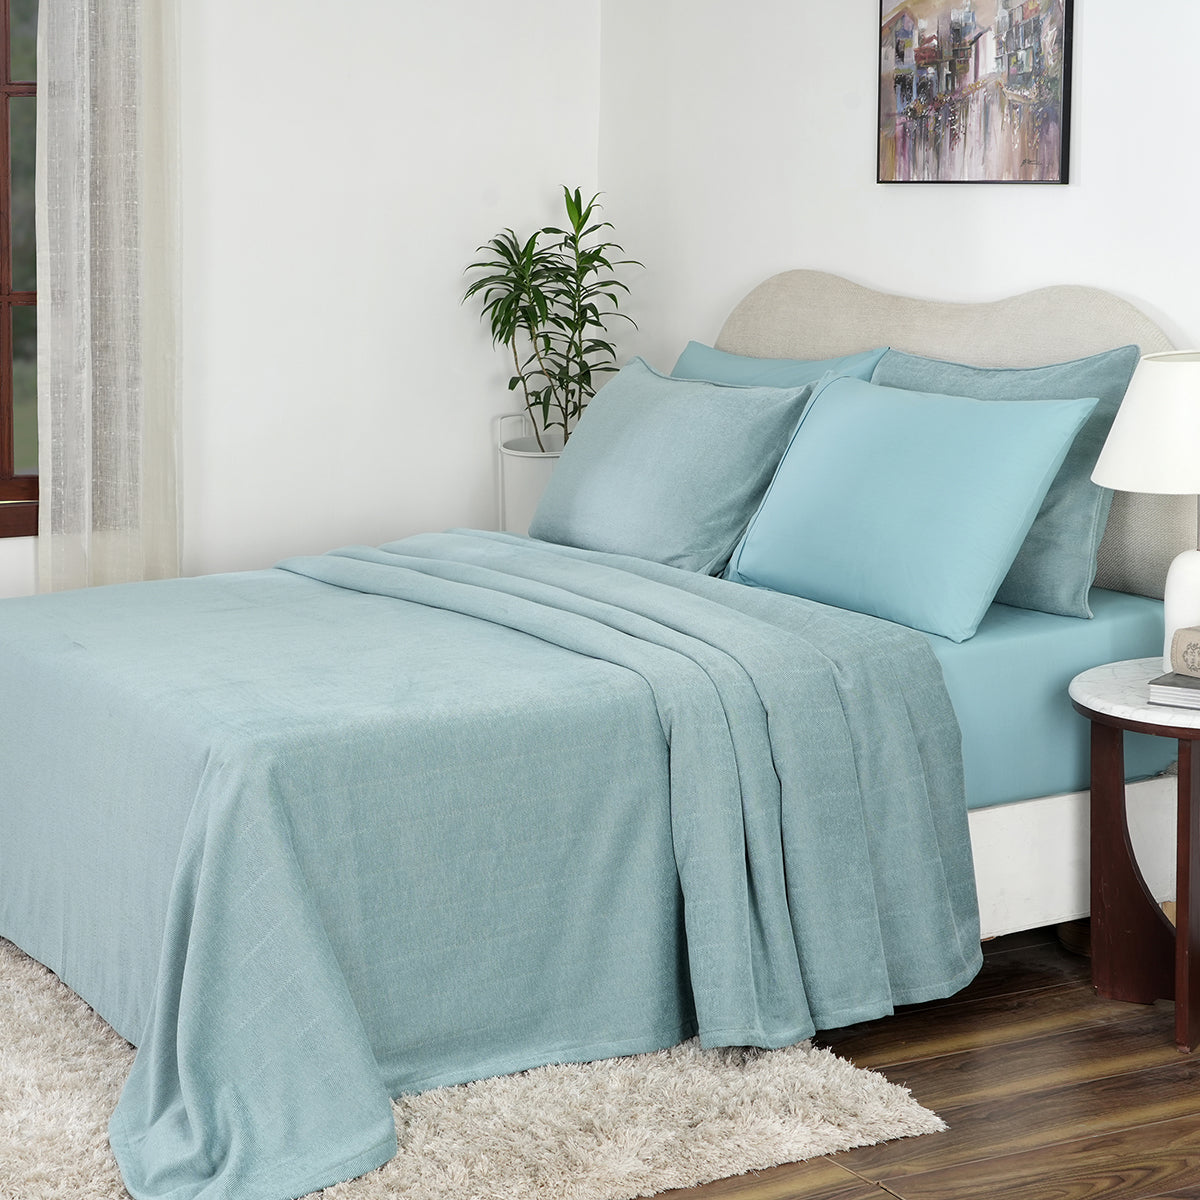 Caroline Woven Herringbone Pattern with Soft Drape Style Aqua Bed Cover/Blanket